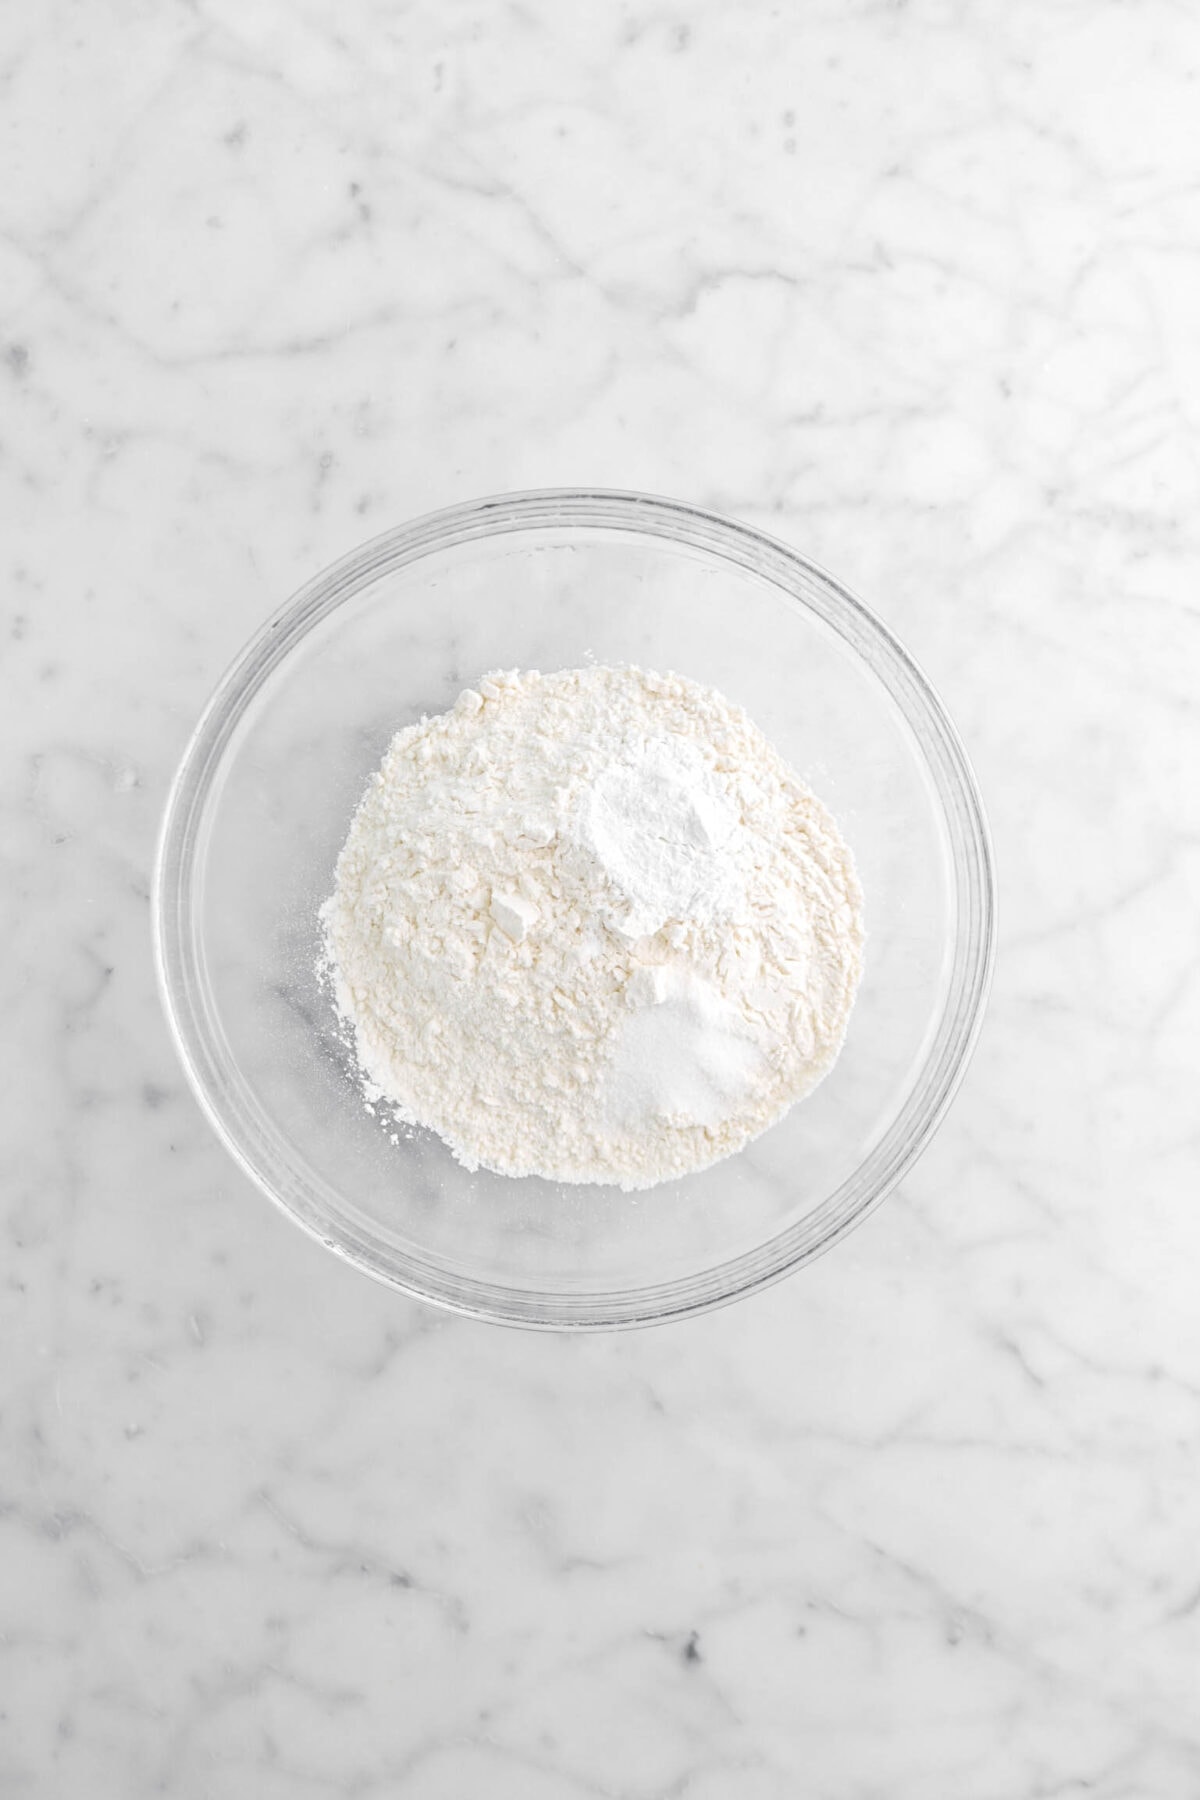 flour, salt, and baking powder in glass bowl